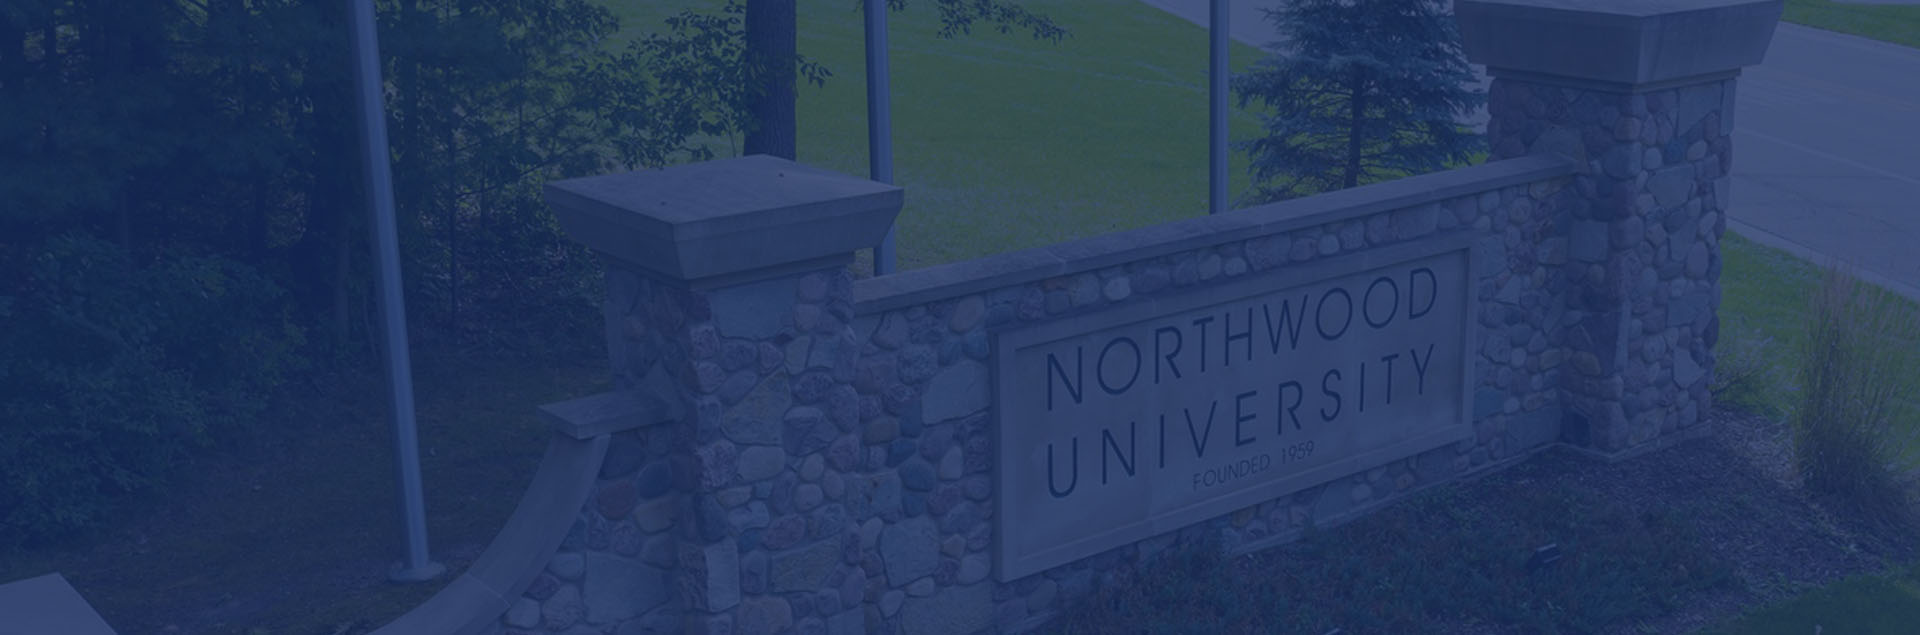 northwood university header